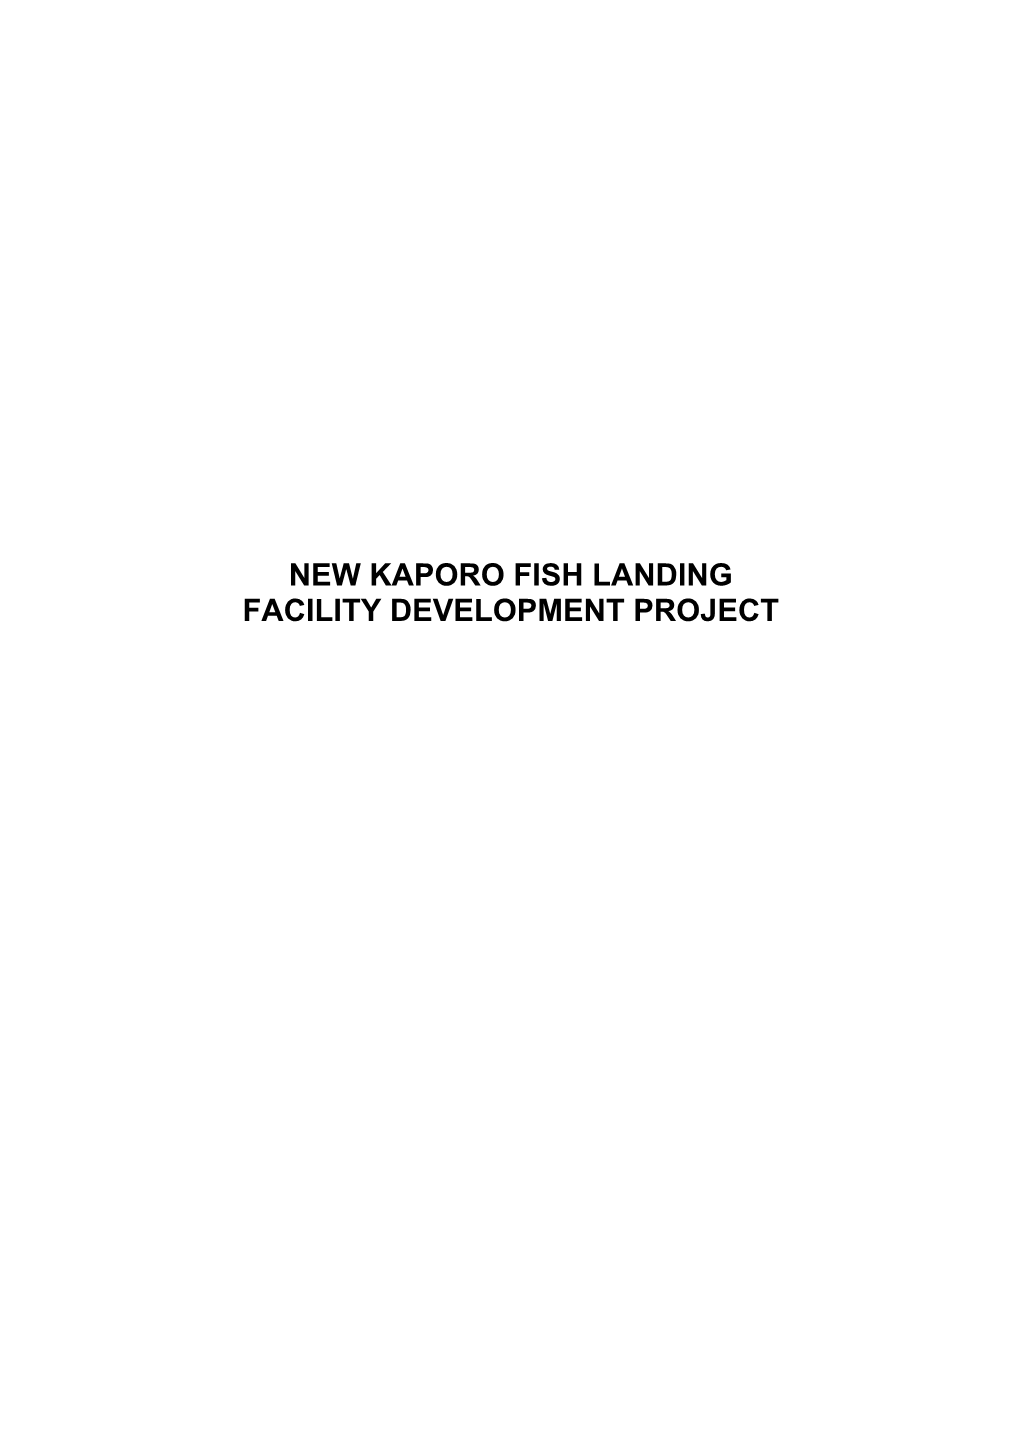 NEW KAPORO FISH LANDING FACILITY DEVELOPMENT PROJECT 5-5 New Kaporo Fish Landing Facility Development Project